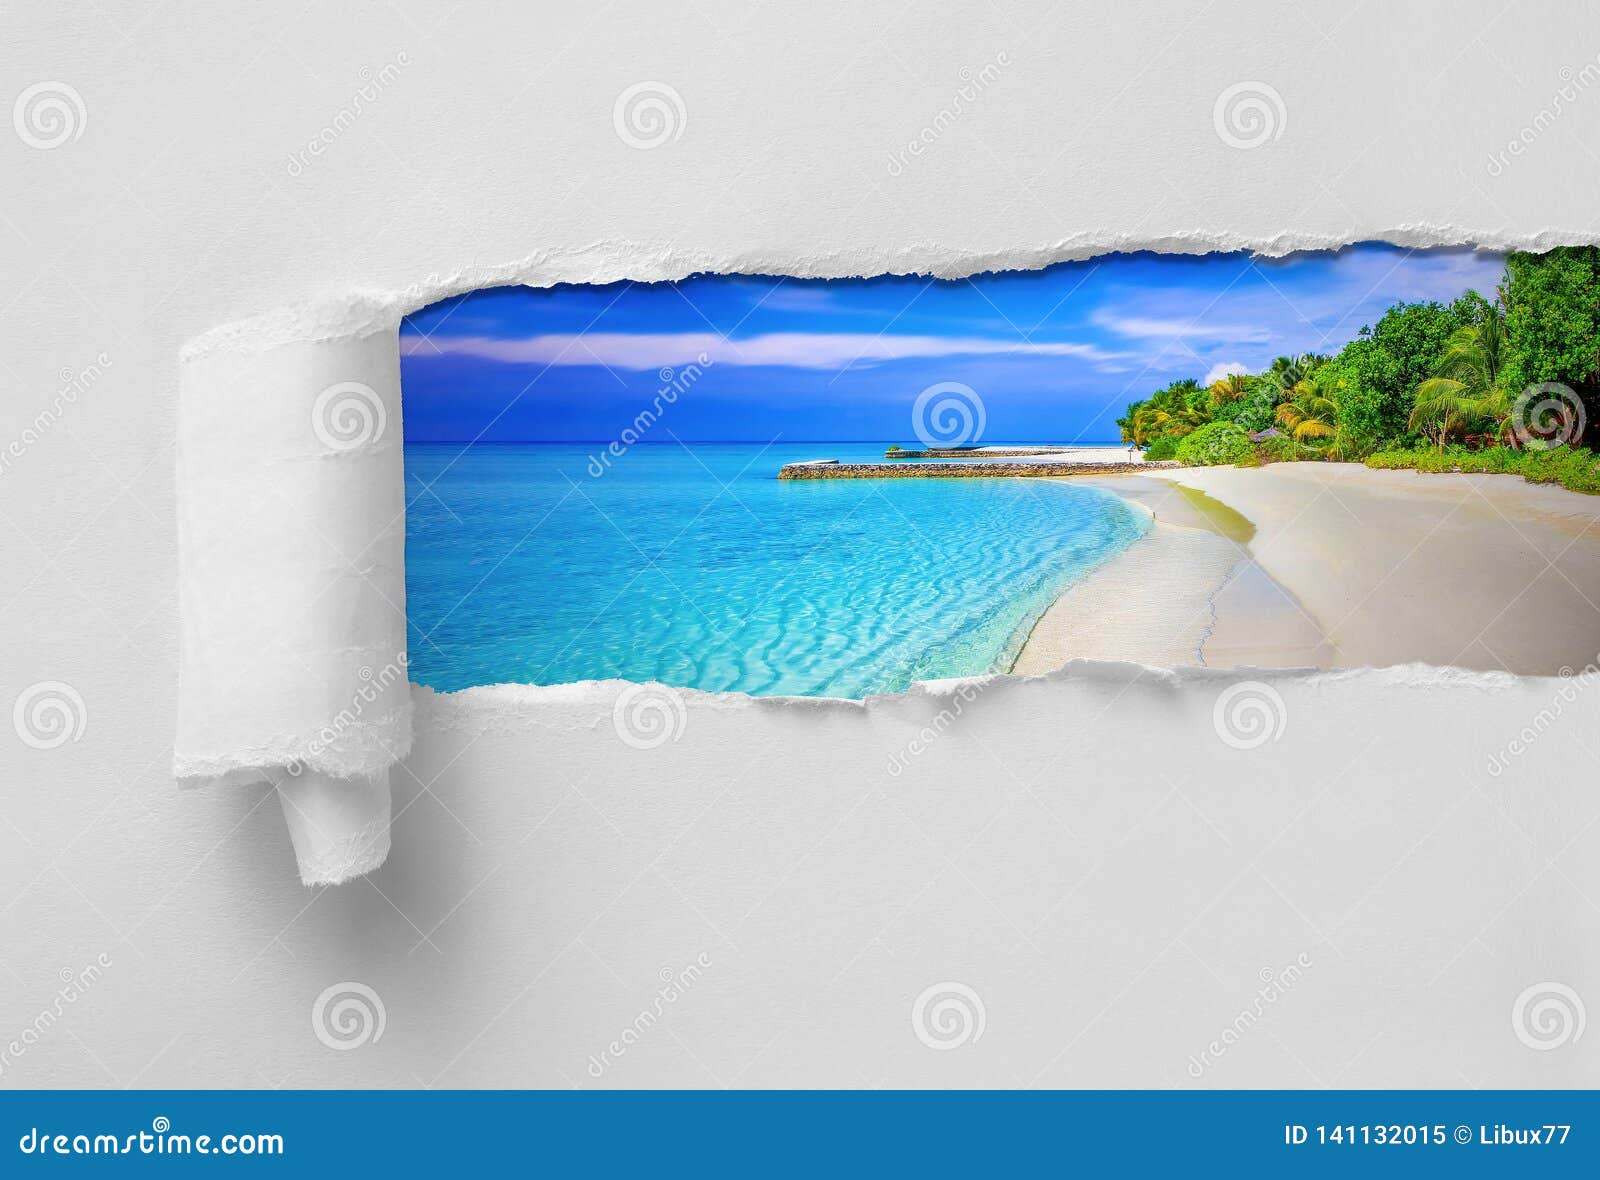 paper ripped revealing paradisiac tropical sea and beach